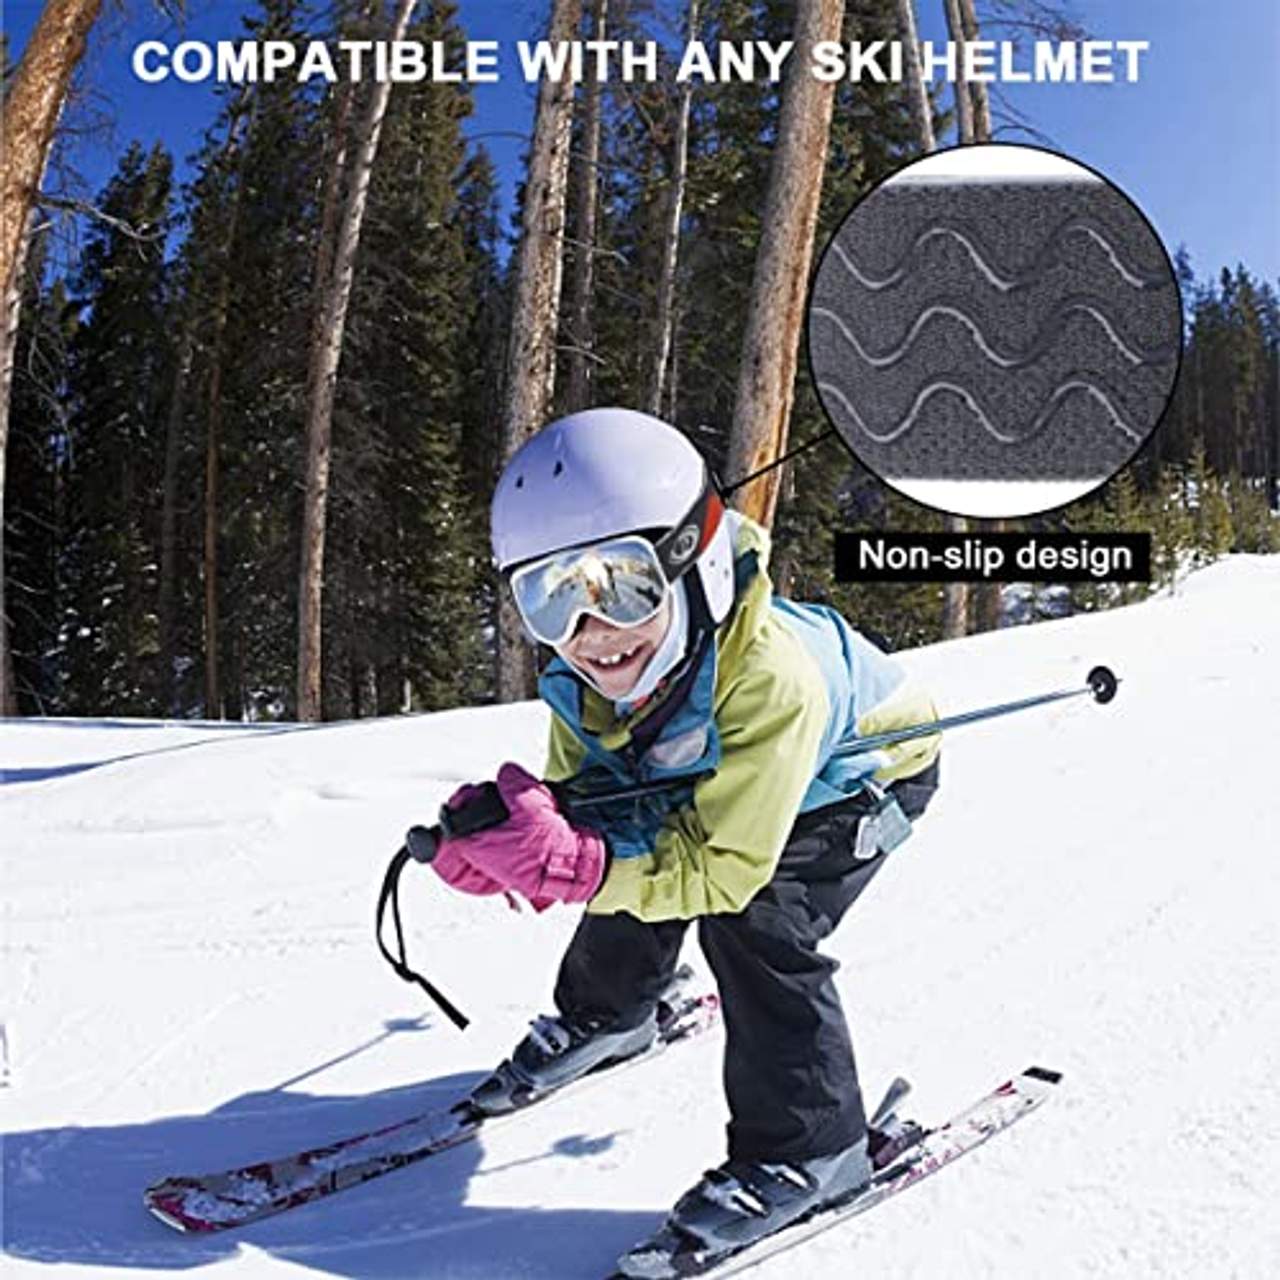 findway Skibrille Kinder Snowboardbrille Helmkompatible Schneebrille Verspiegelt